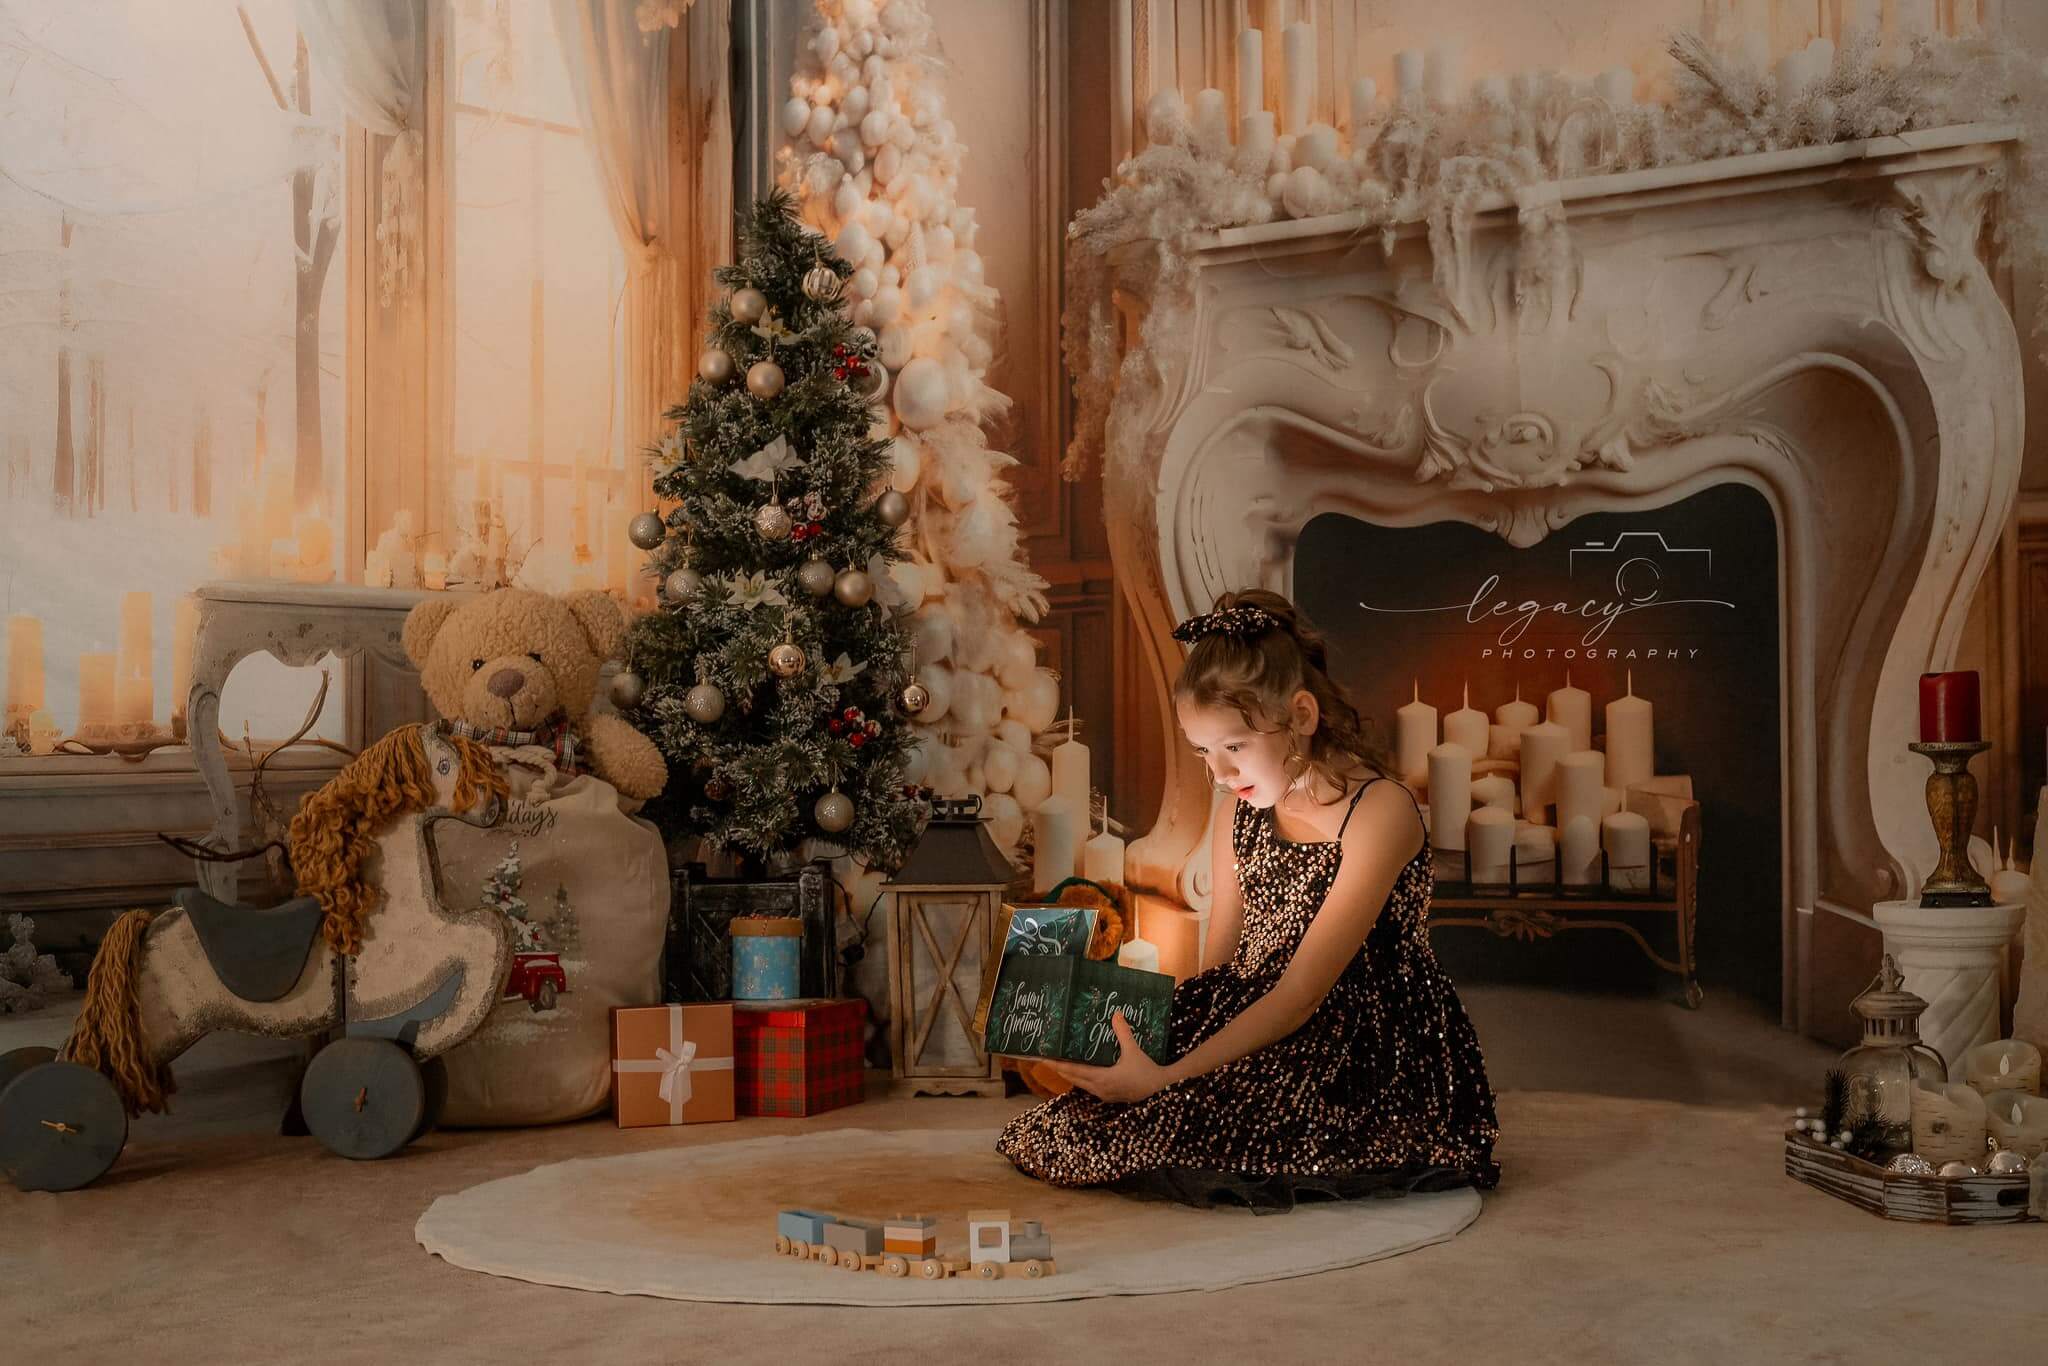 Kate Christmas Fireplace Winter Room Set(8ftx8ft&10ftx8ft&8ftx10ft)